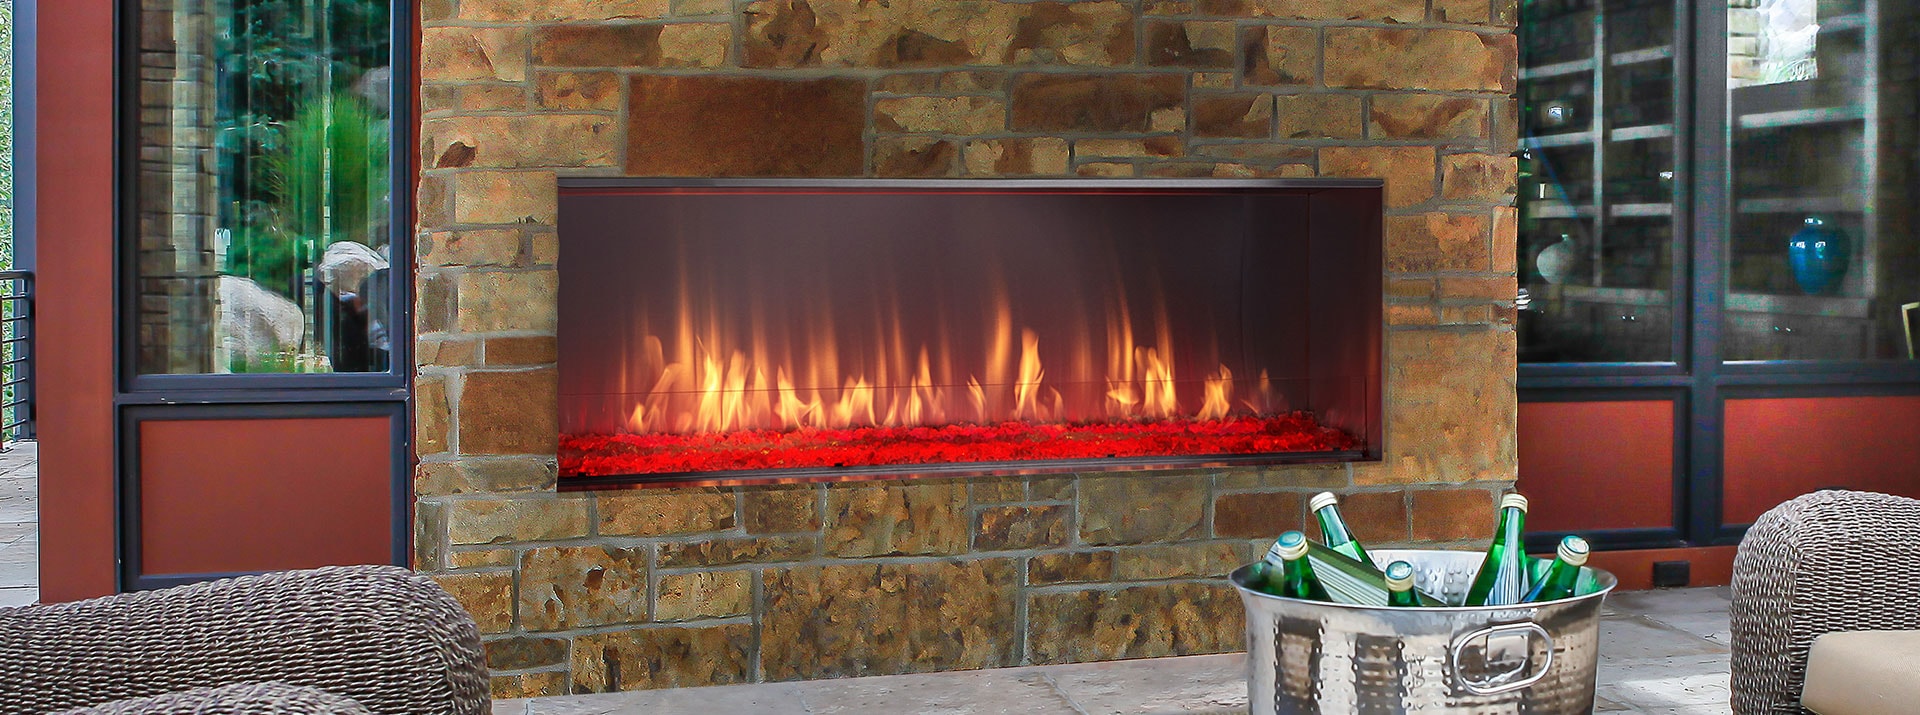 Outdoor Linear Gas Fireplace Beautiful Lanai Gas Outdoor Fireplace